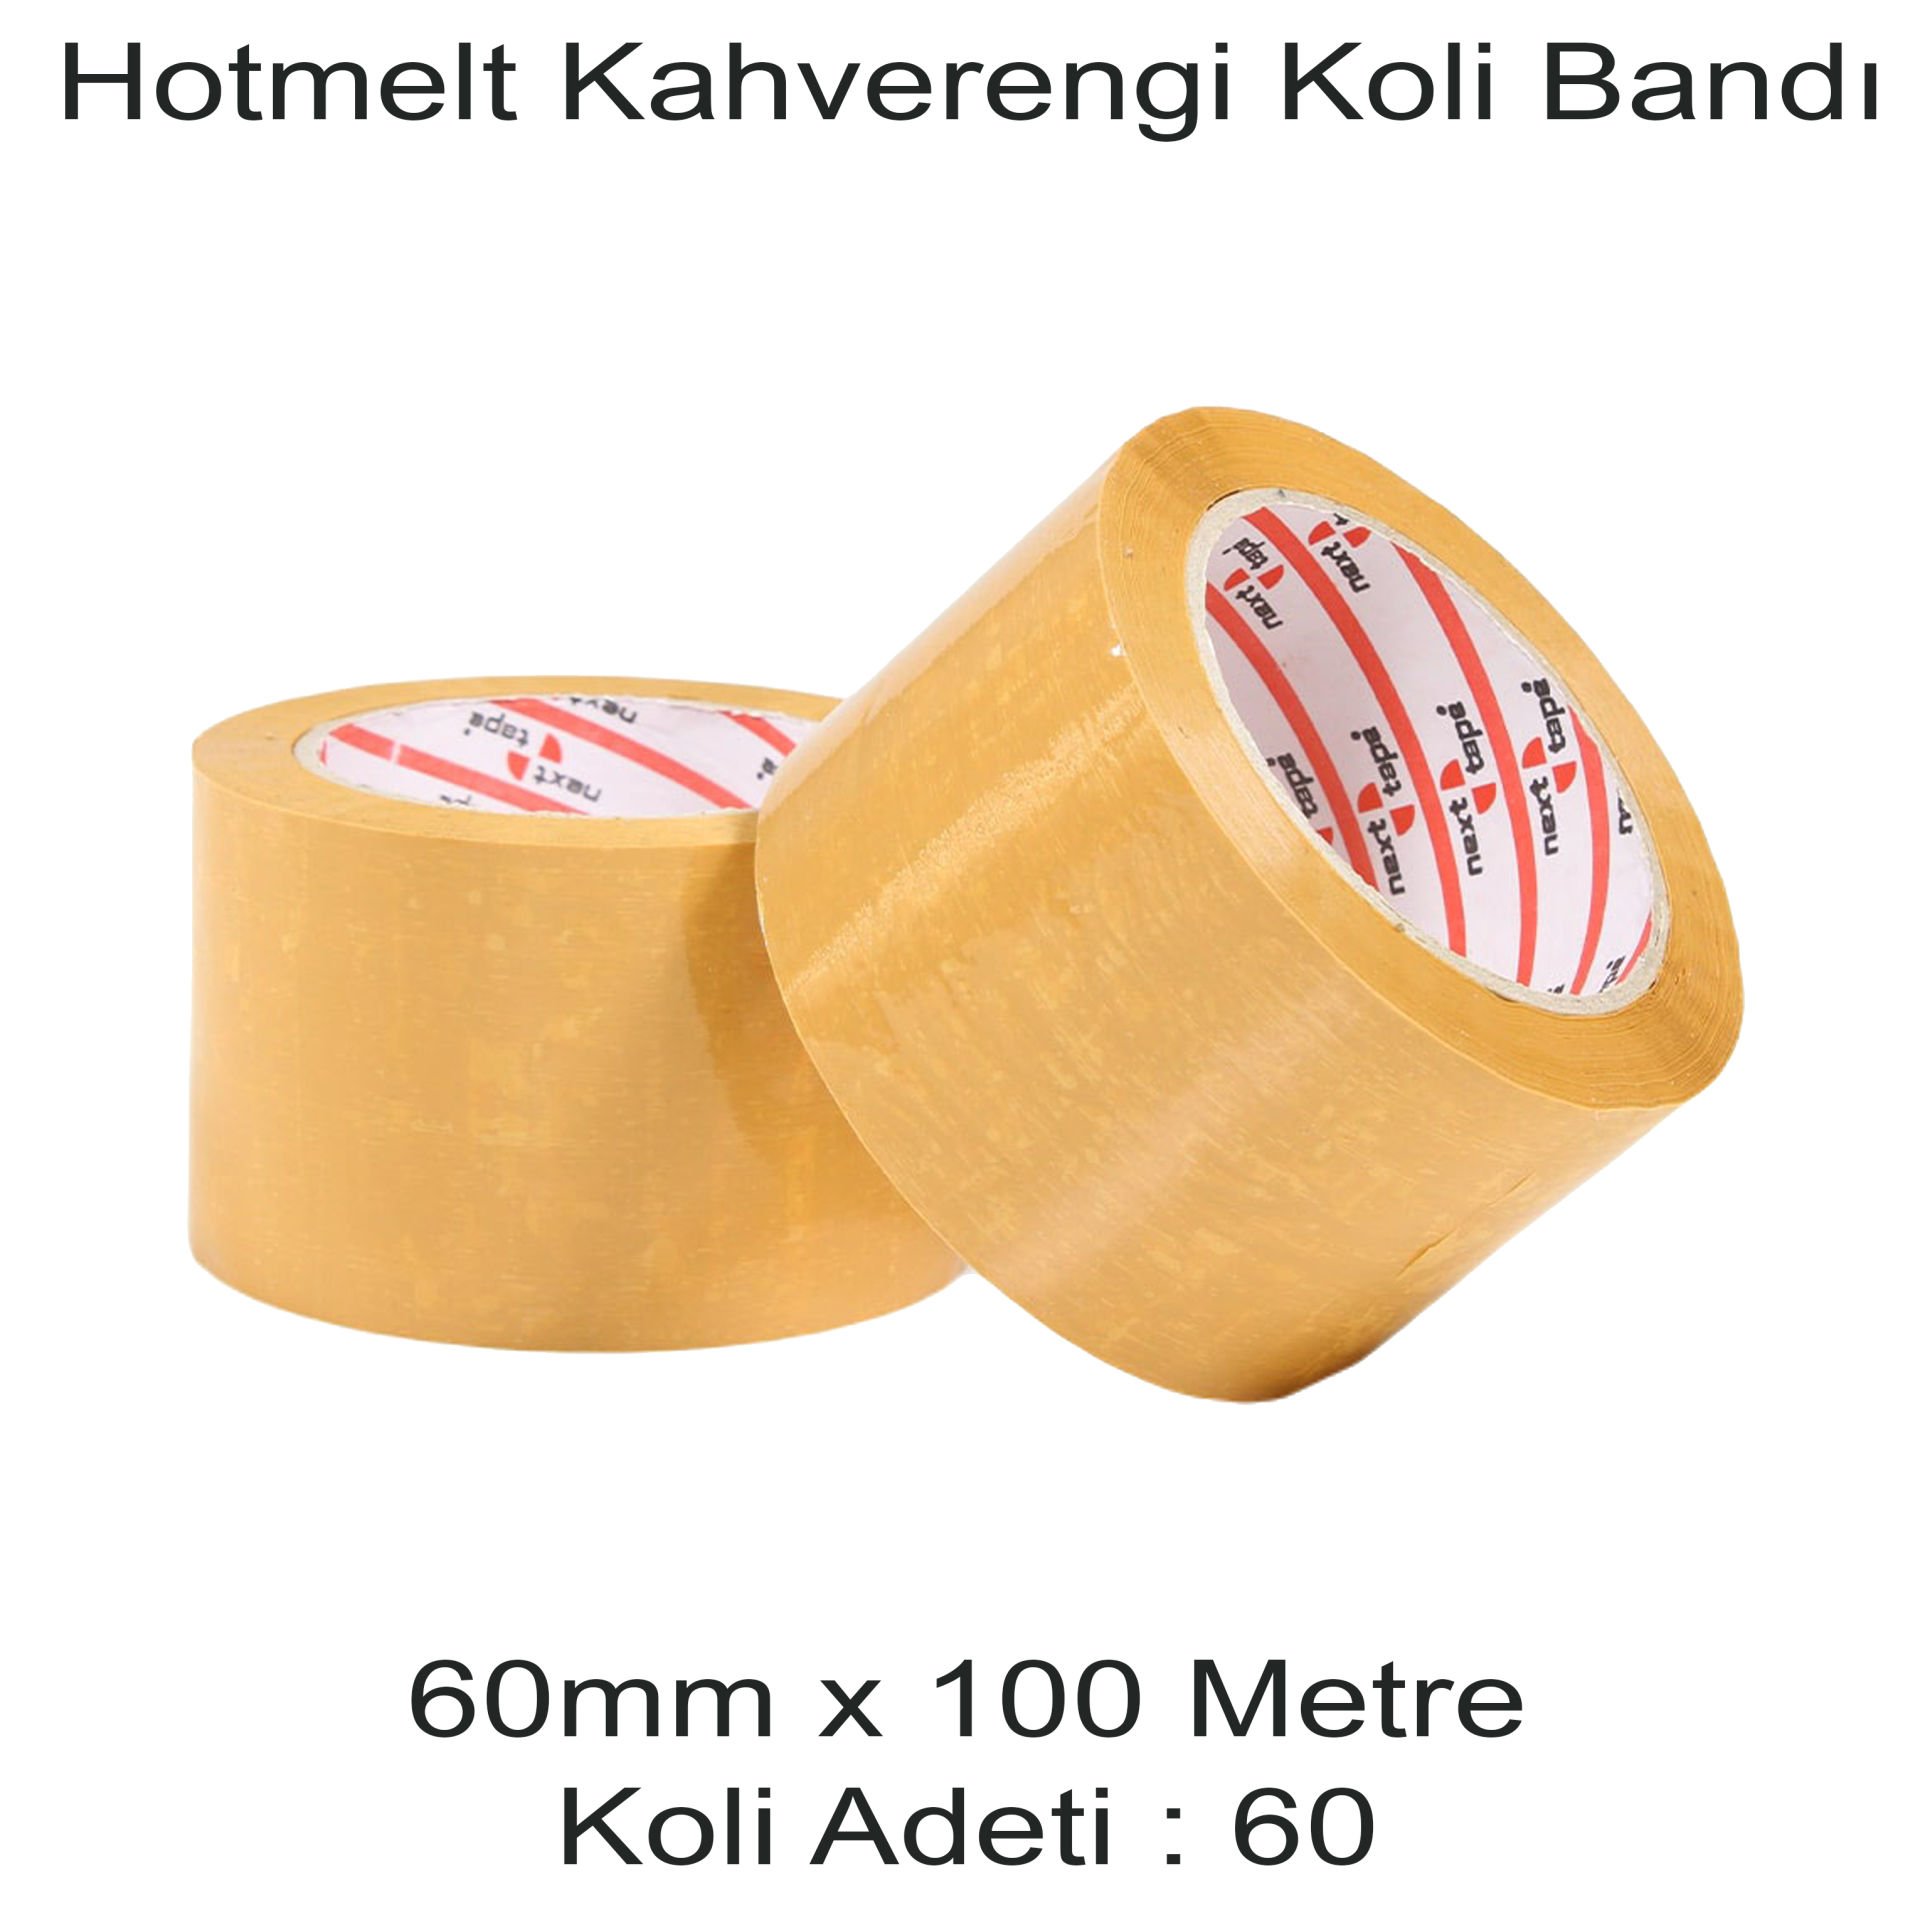 NEXT TAPE Hotmelt Kahverengi Koli Bandı 60mm x 100 Metre ( 60 Adet )